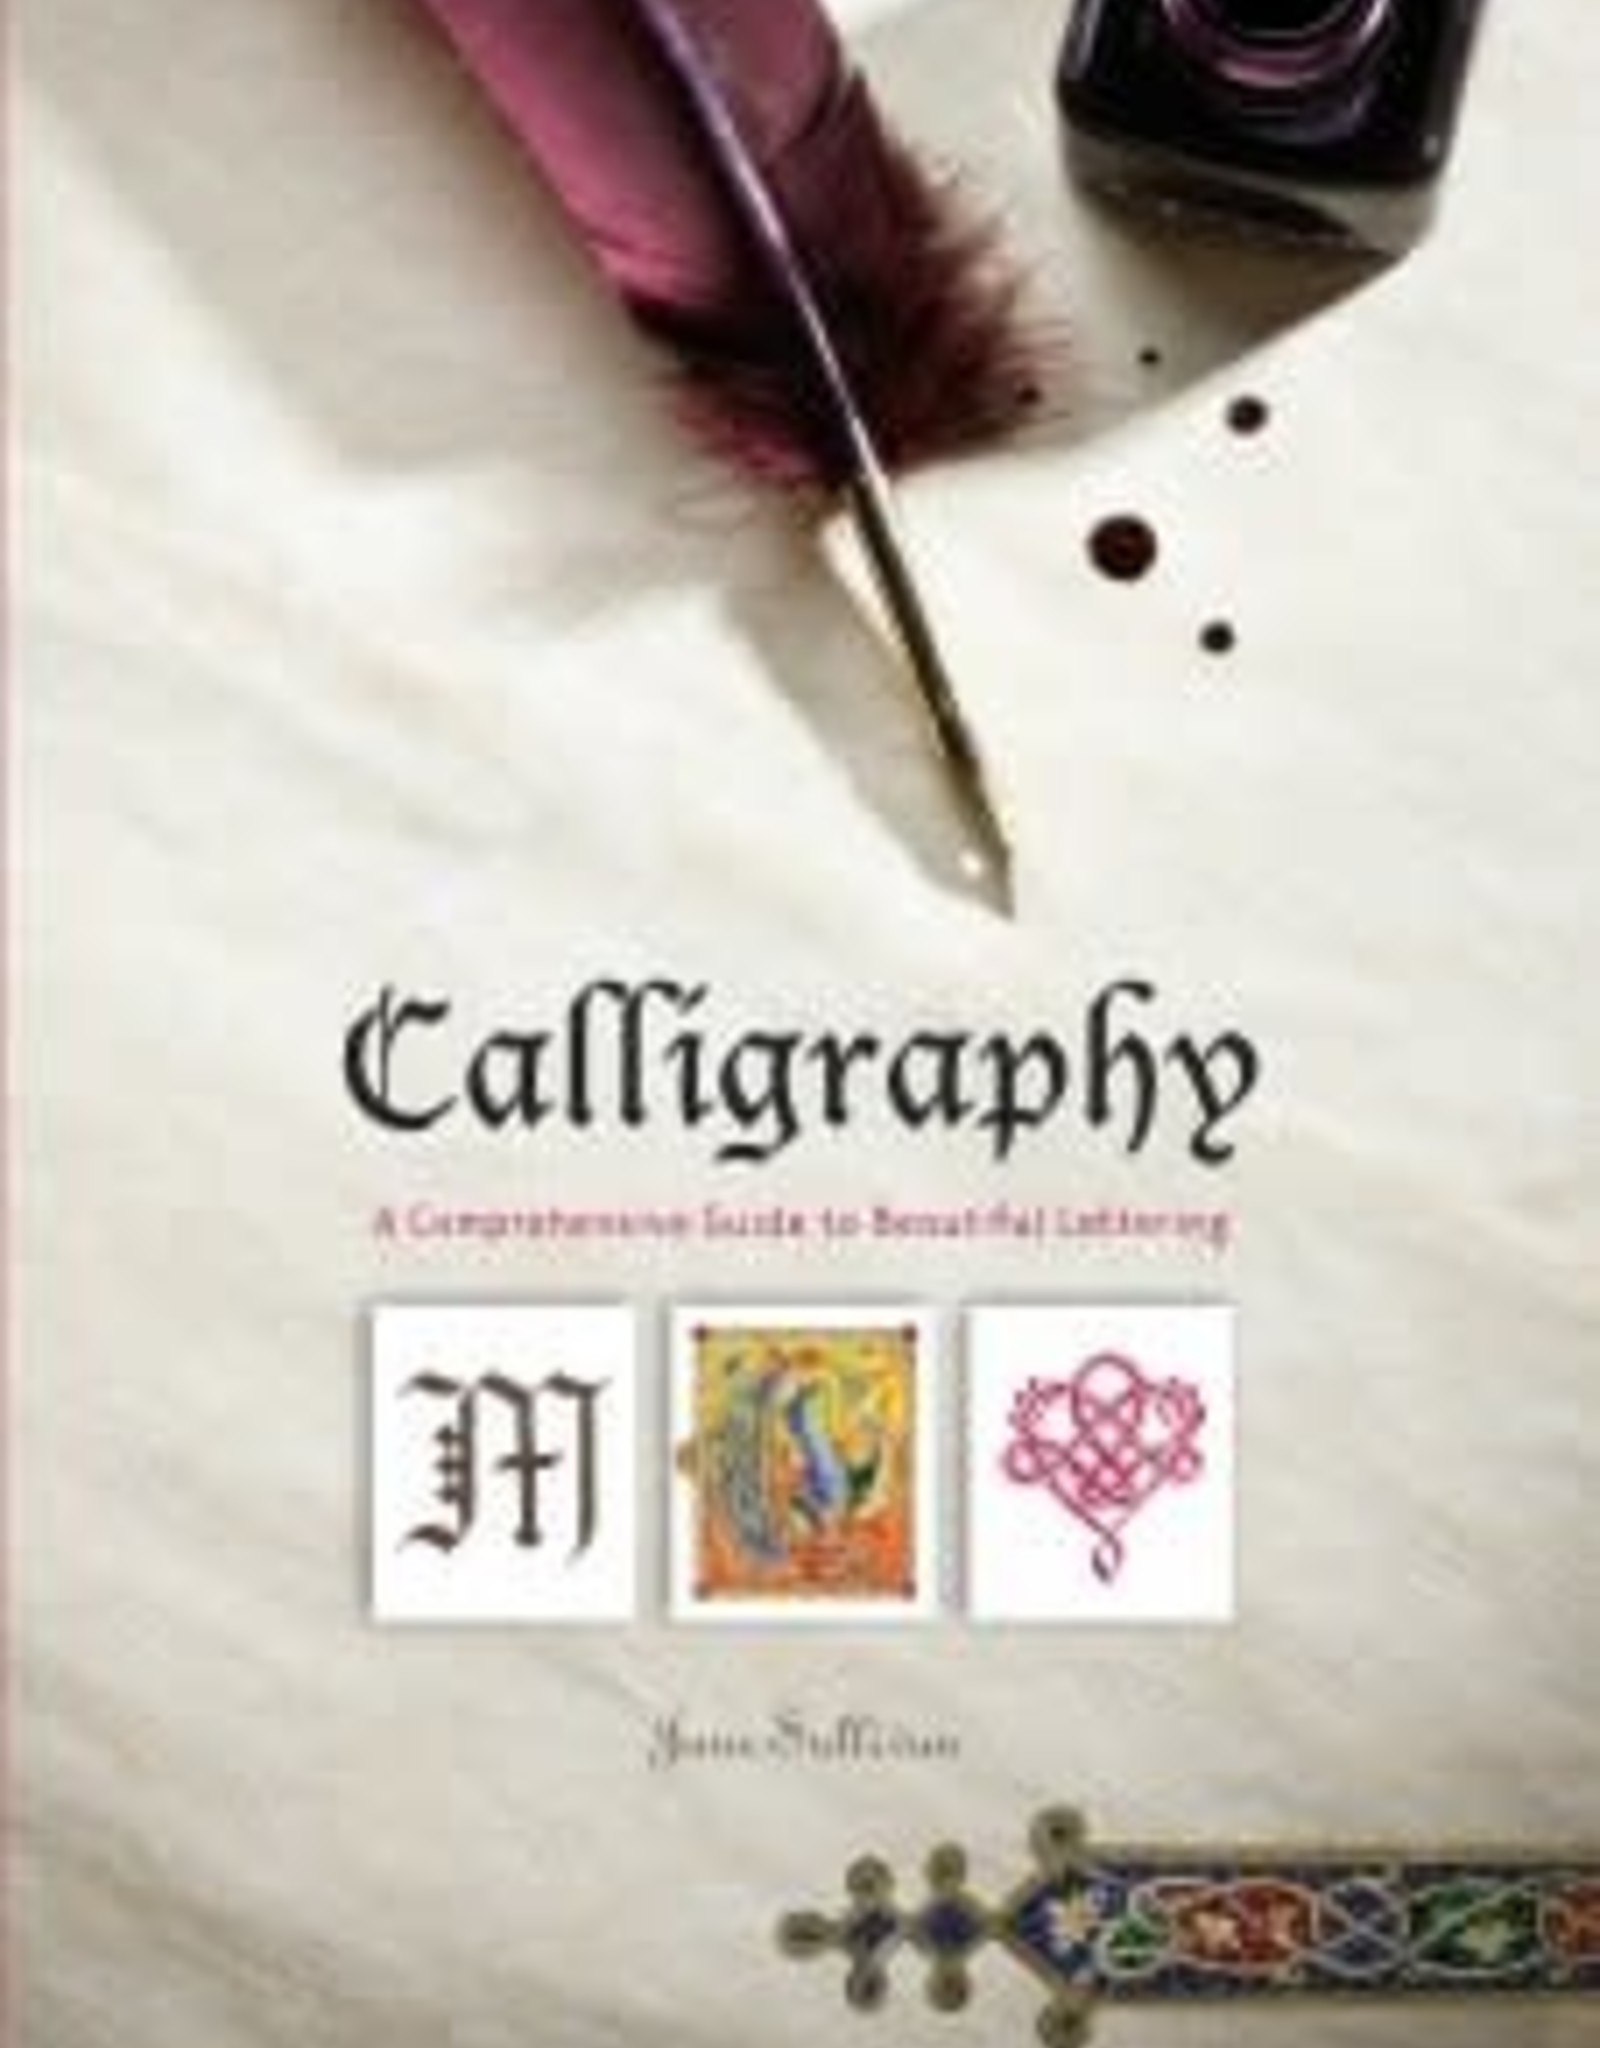 Peter Pauper Press Calligraphy book